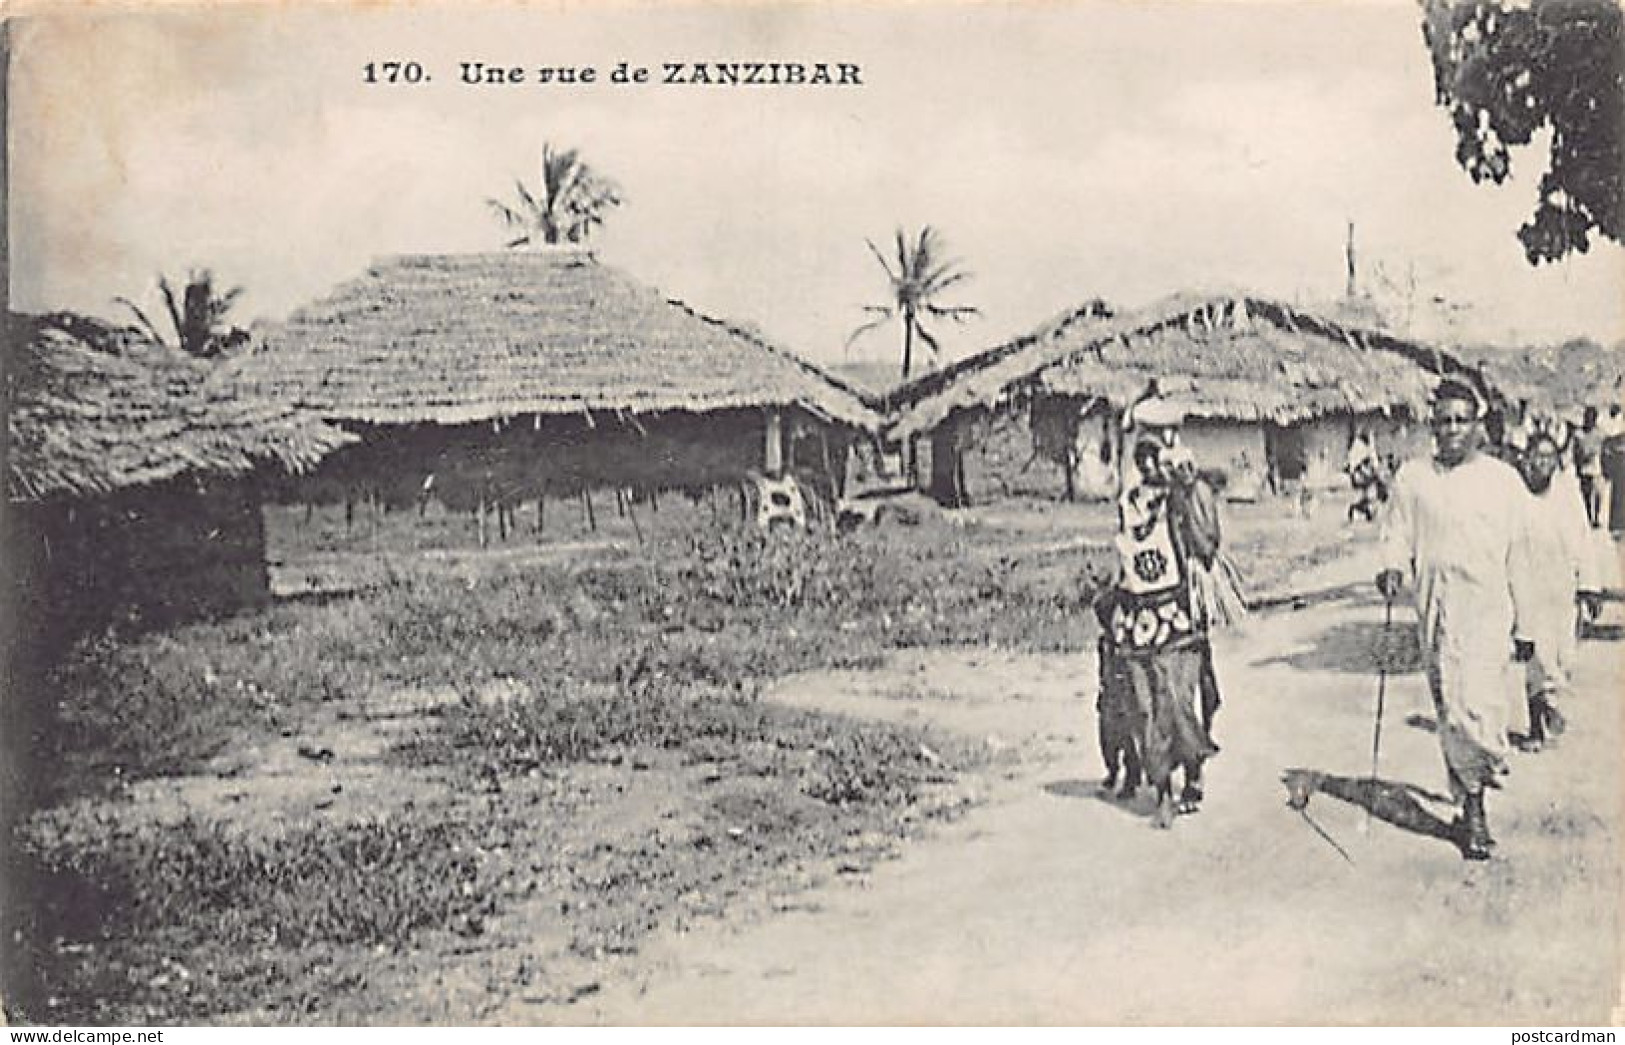 Tanzania - ZANZIBAR - A Street - Publ. Messageries Maritimes 170 - Tanzania